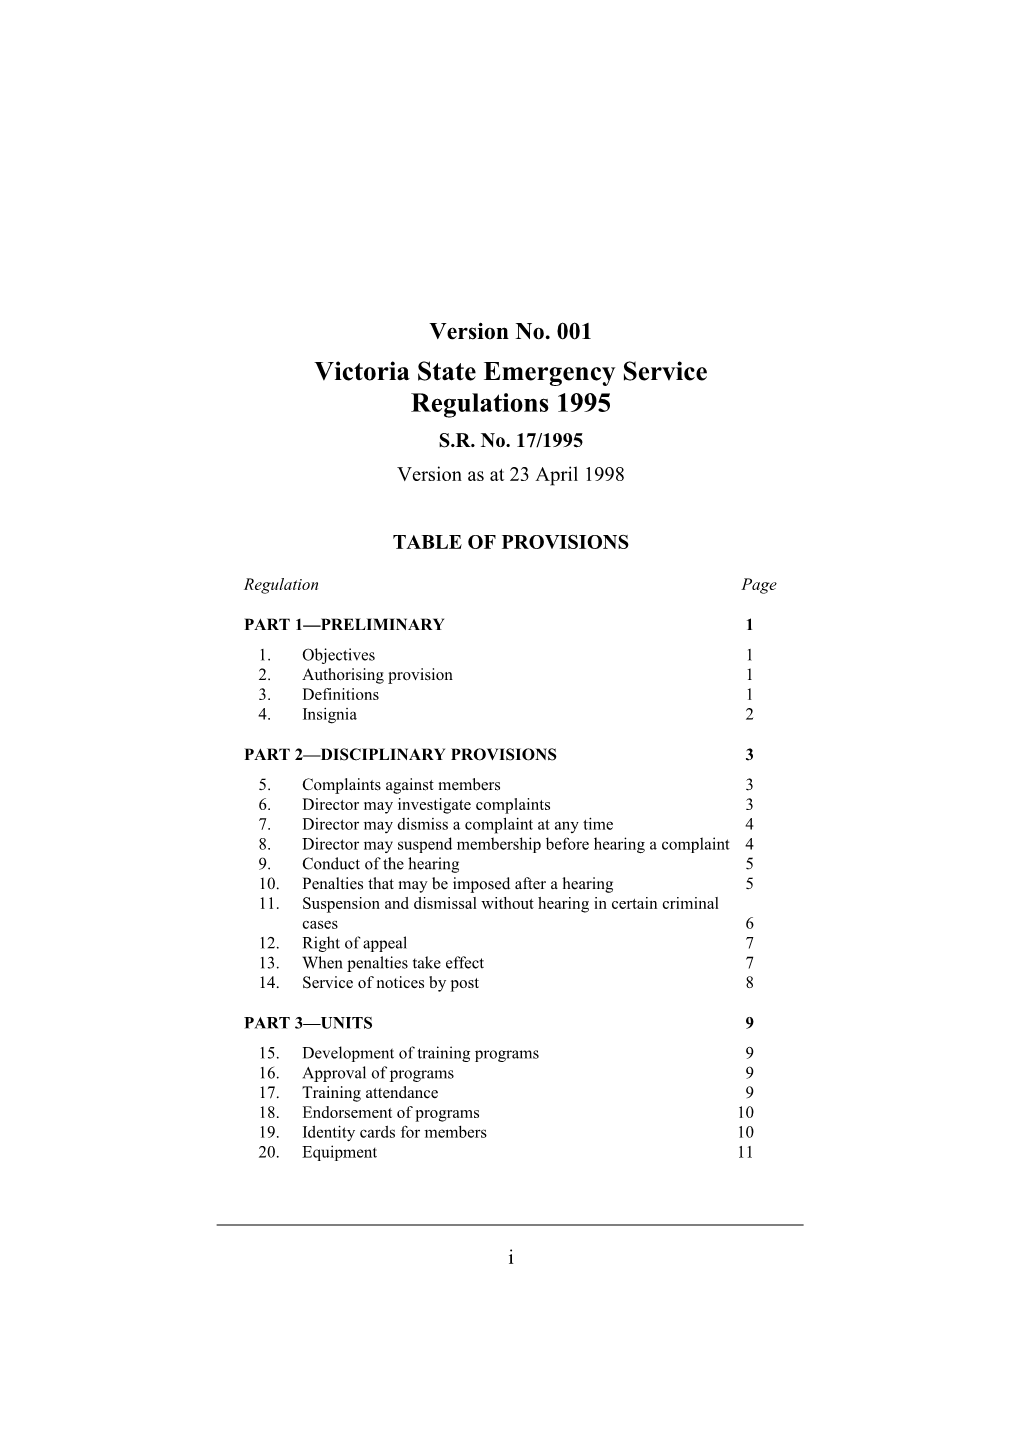 Victoria State Emergency Service Regulations 1995